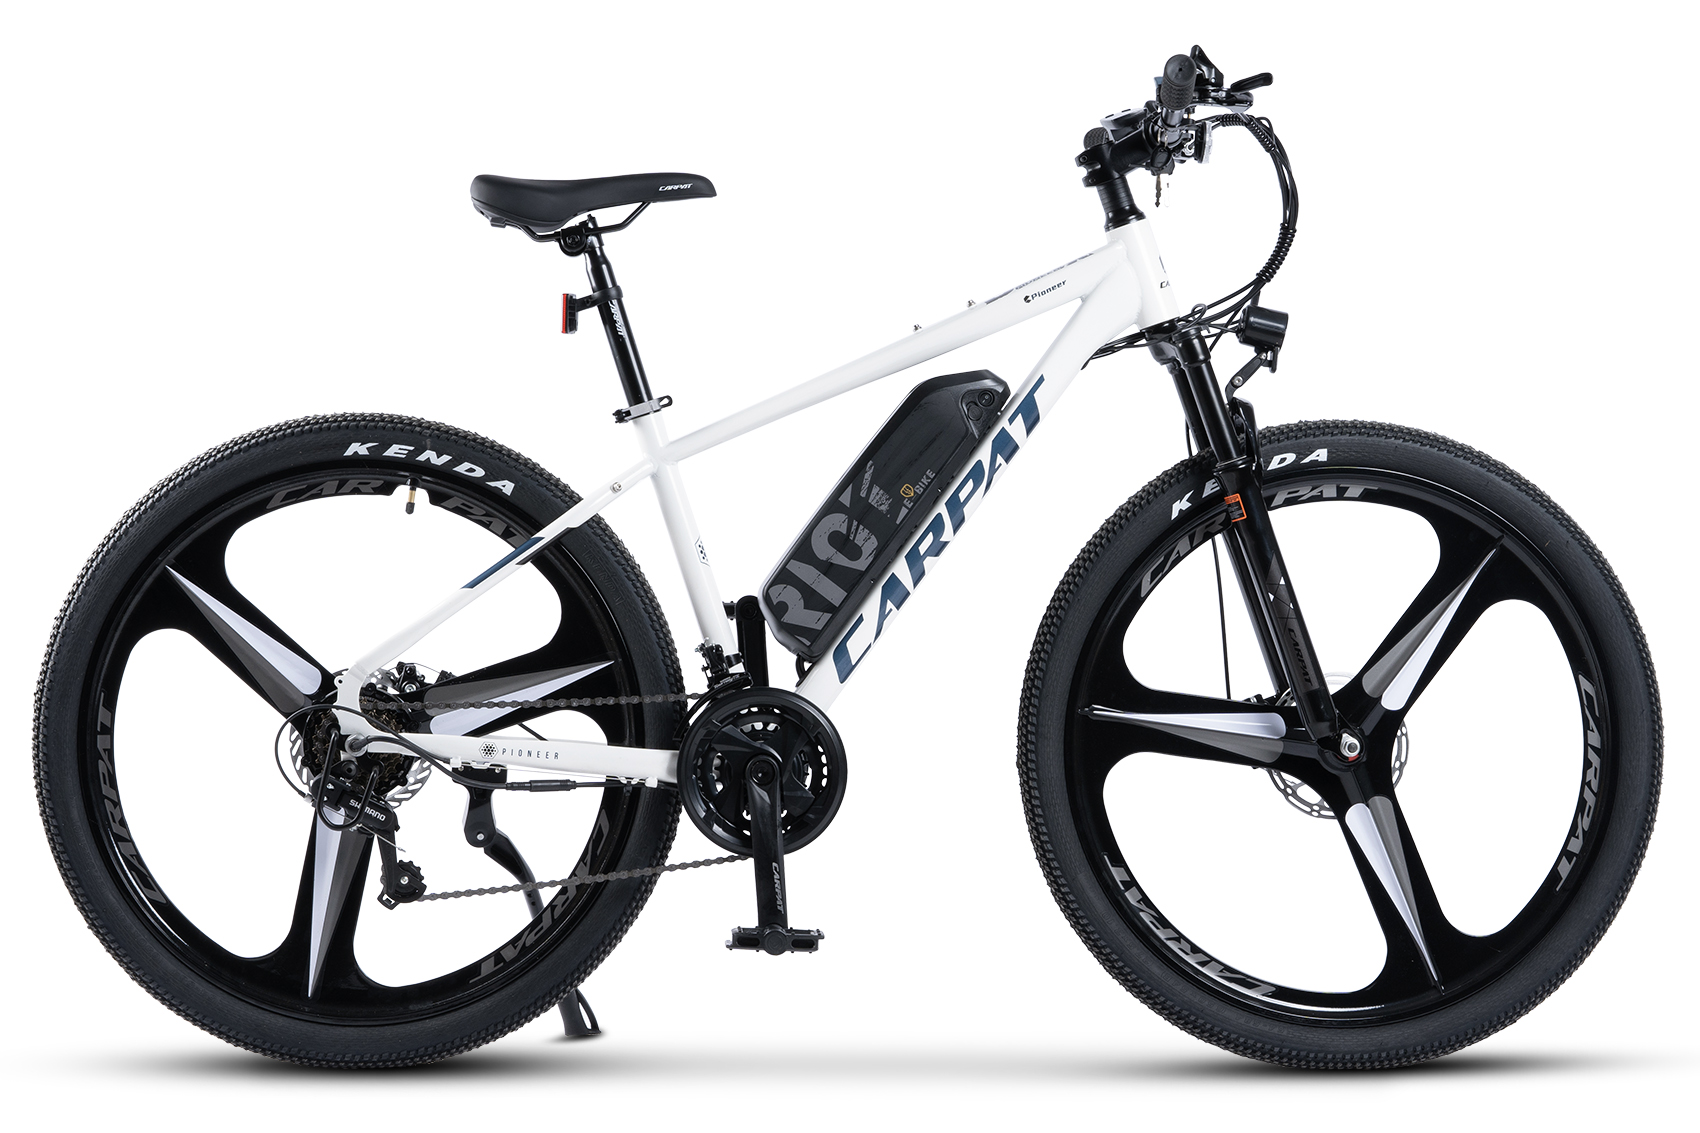 PROMO BICICLETE - Bicicleta Electrica MTB (E-Bike) Carpat Pioneer C27517E 27.5", Alb/Albastru, https:carpatsport.ro